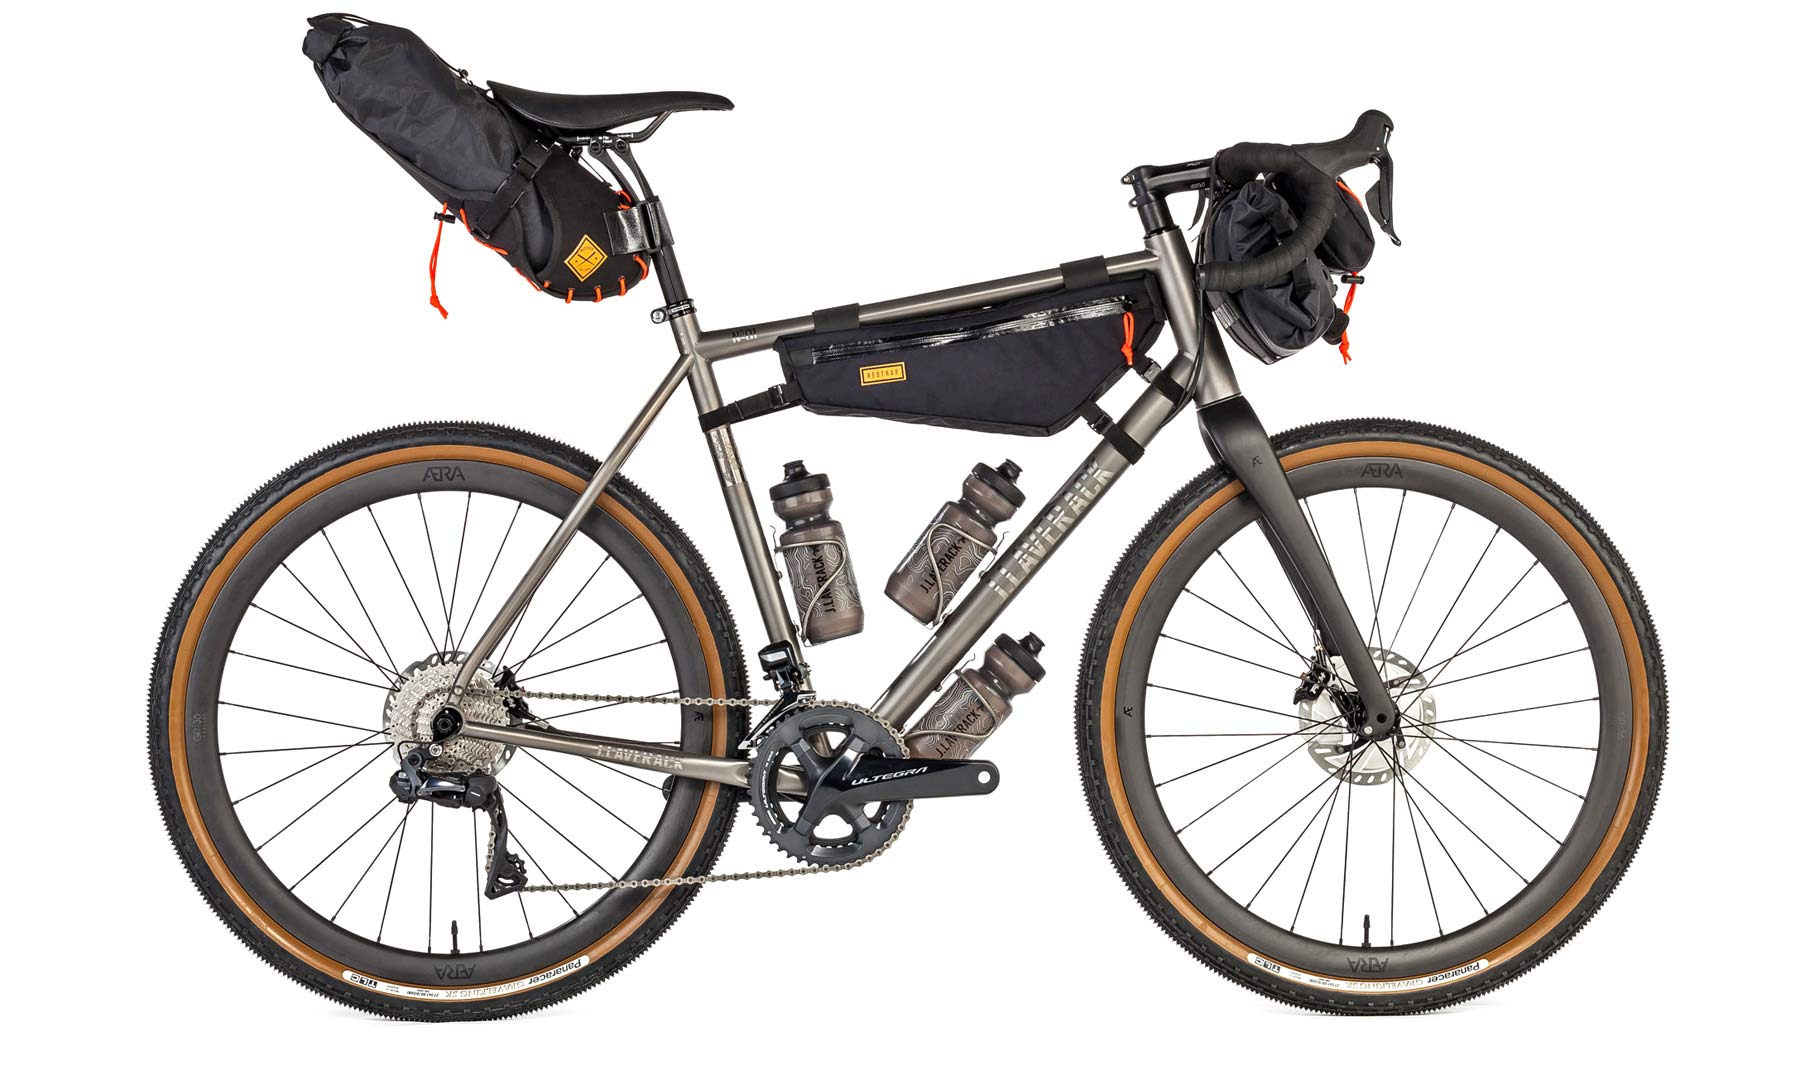 J.Laverack GRiT made-to-order titanium gravel bike, ready for adventure ...